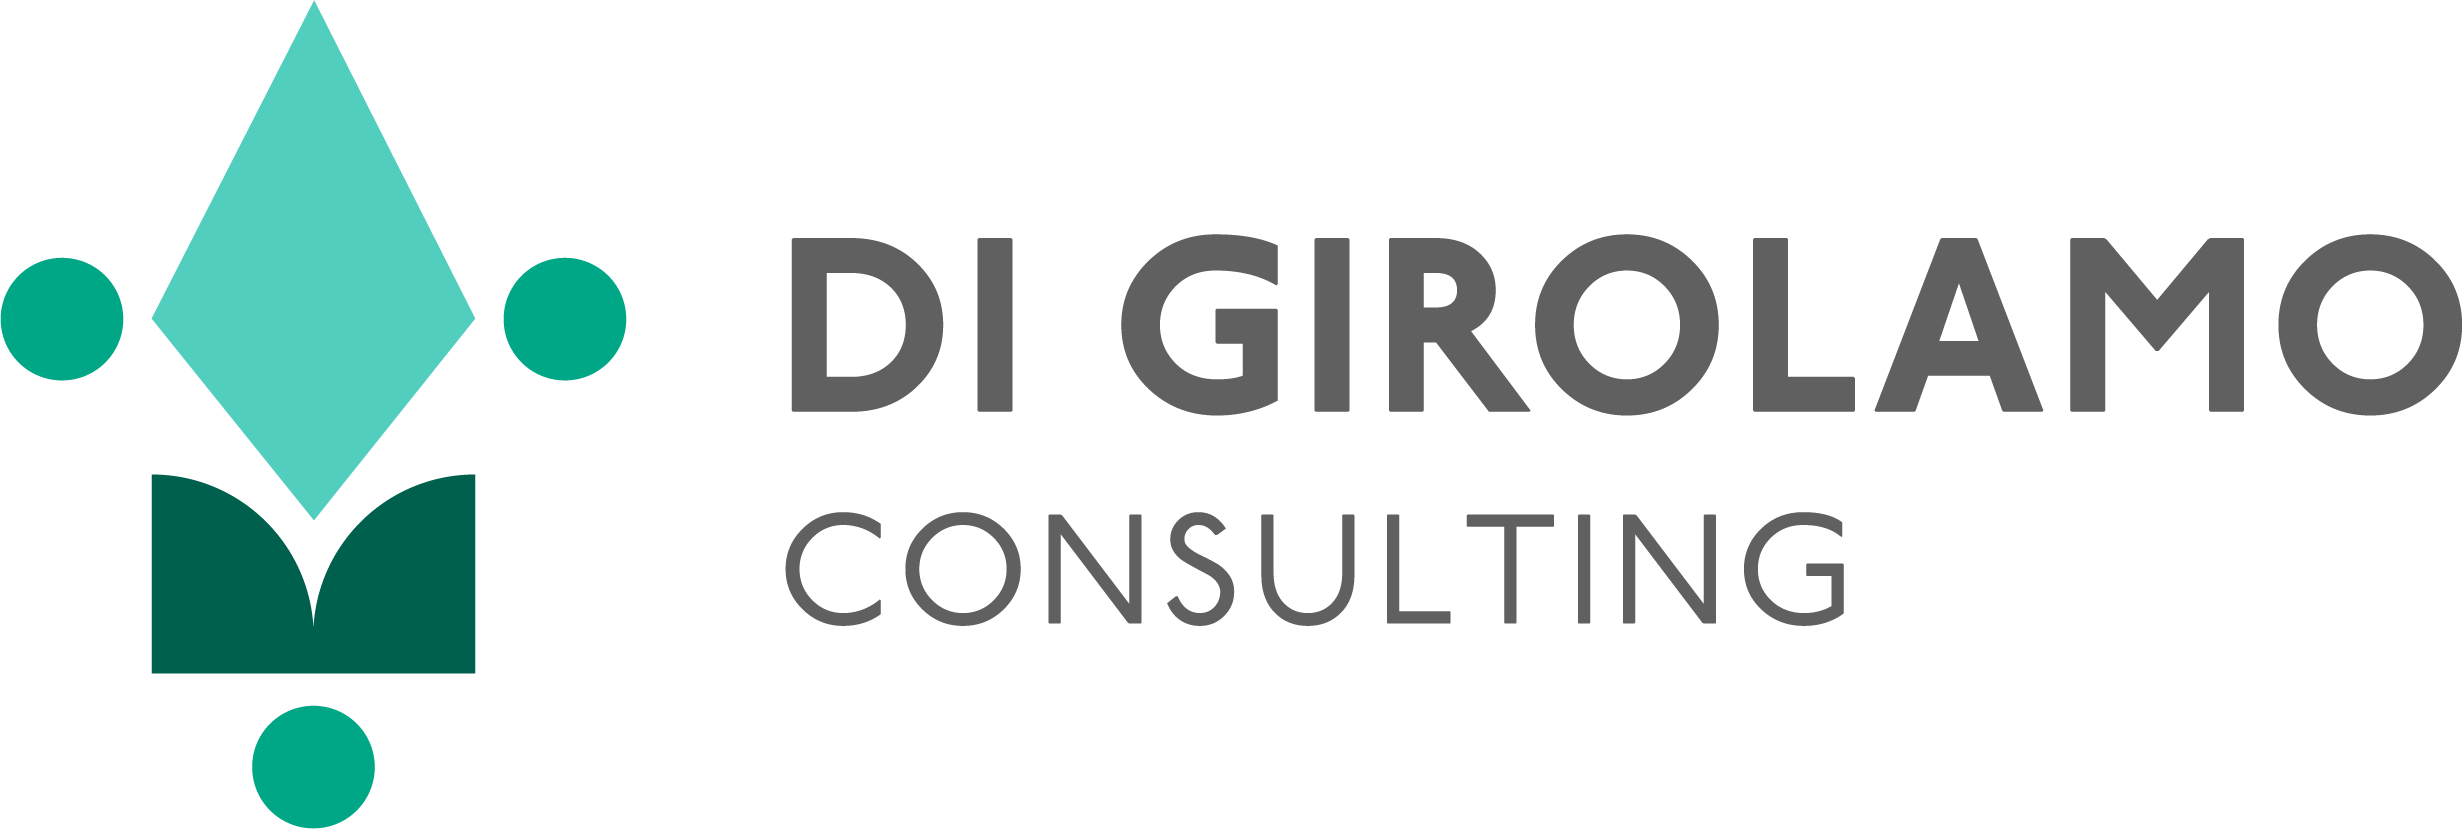 Di Girolamo Consulting Logo